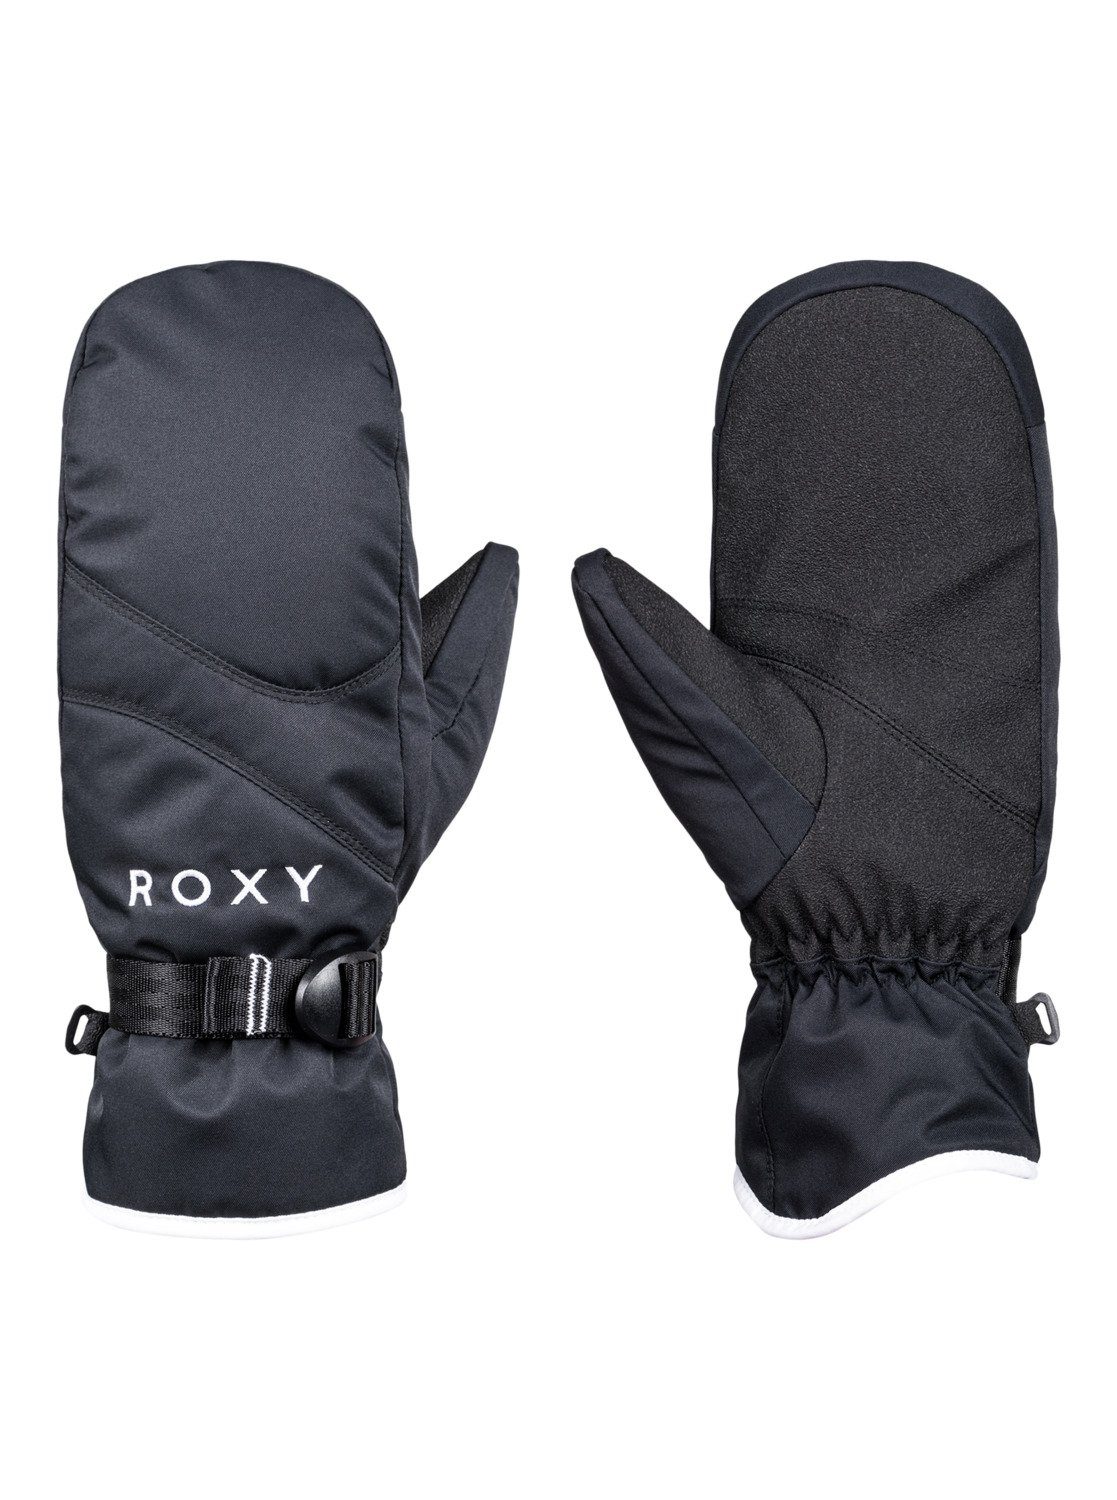 Roxy Snowboardhandschuhe ROXY Jetty Black True